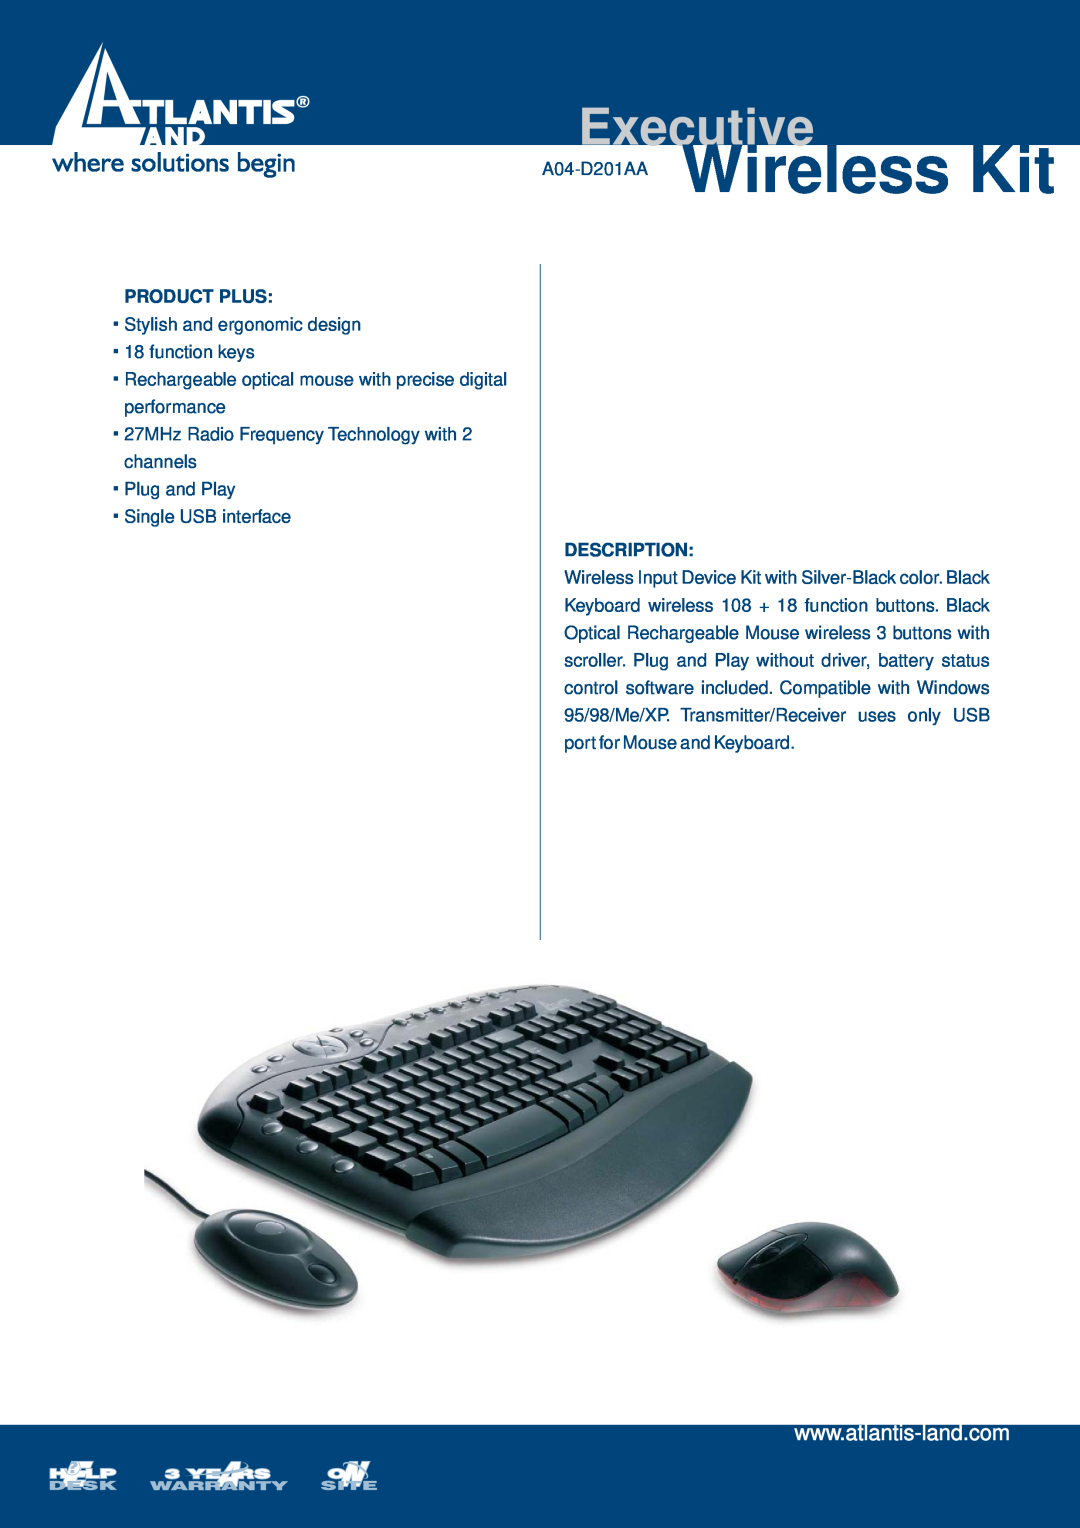 Atlantis Land manual A04-D201AA Wireless Kit, Executive, Product Plus, Description 